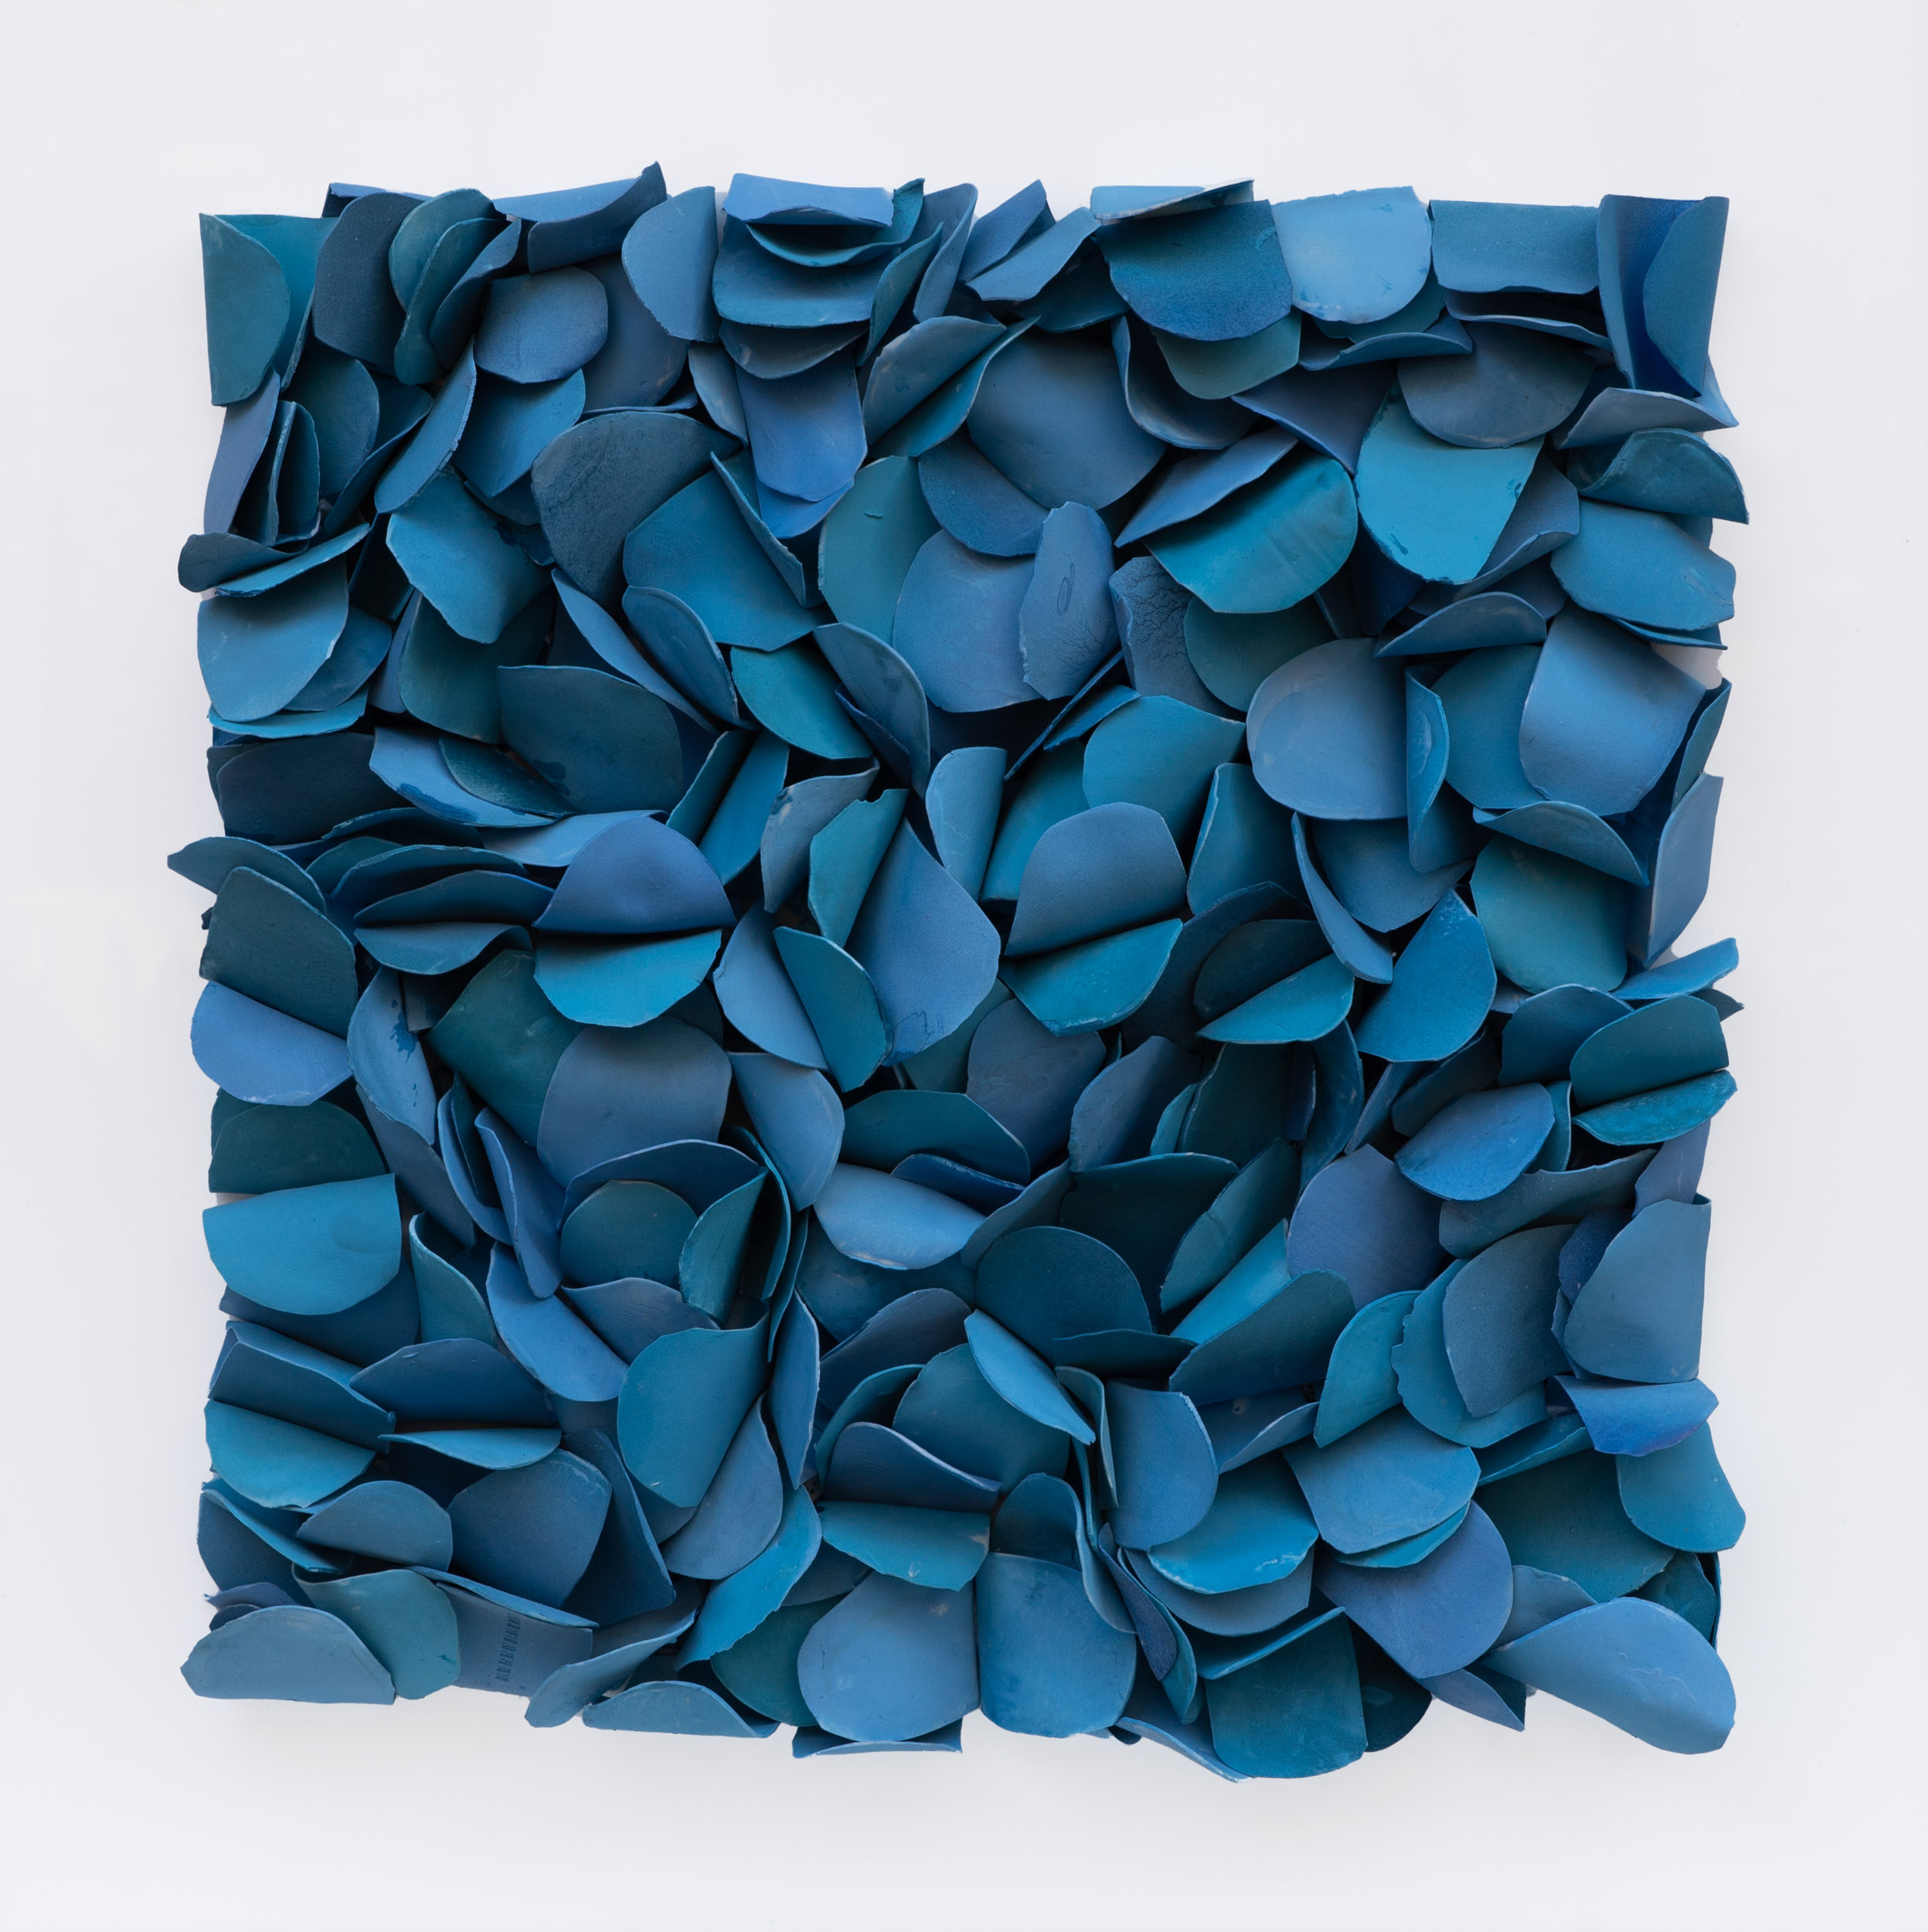 Jeanne Opgenhaffen Endless Growing Blauw 50x50cm 2023 for Forwart Gallery